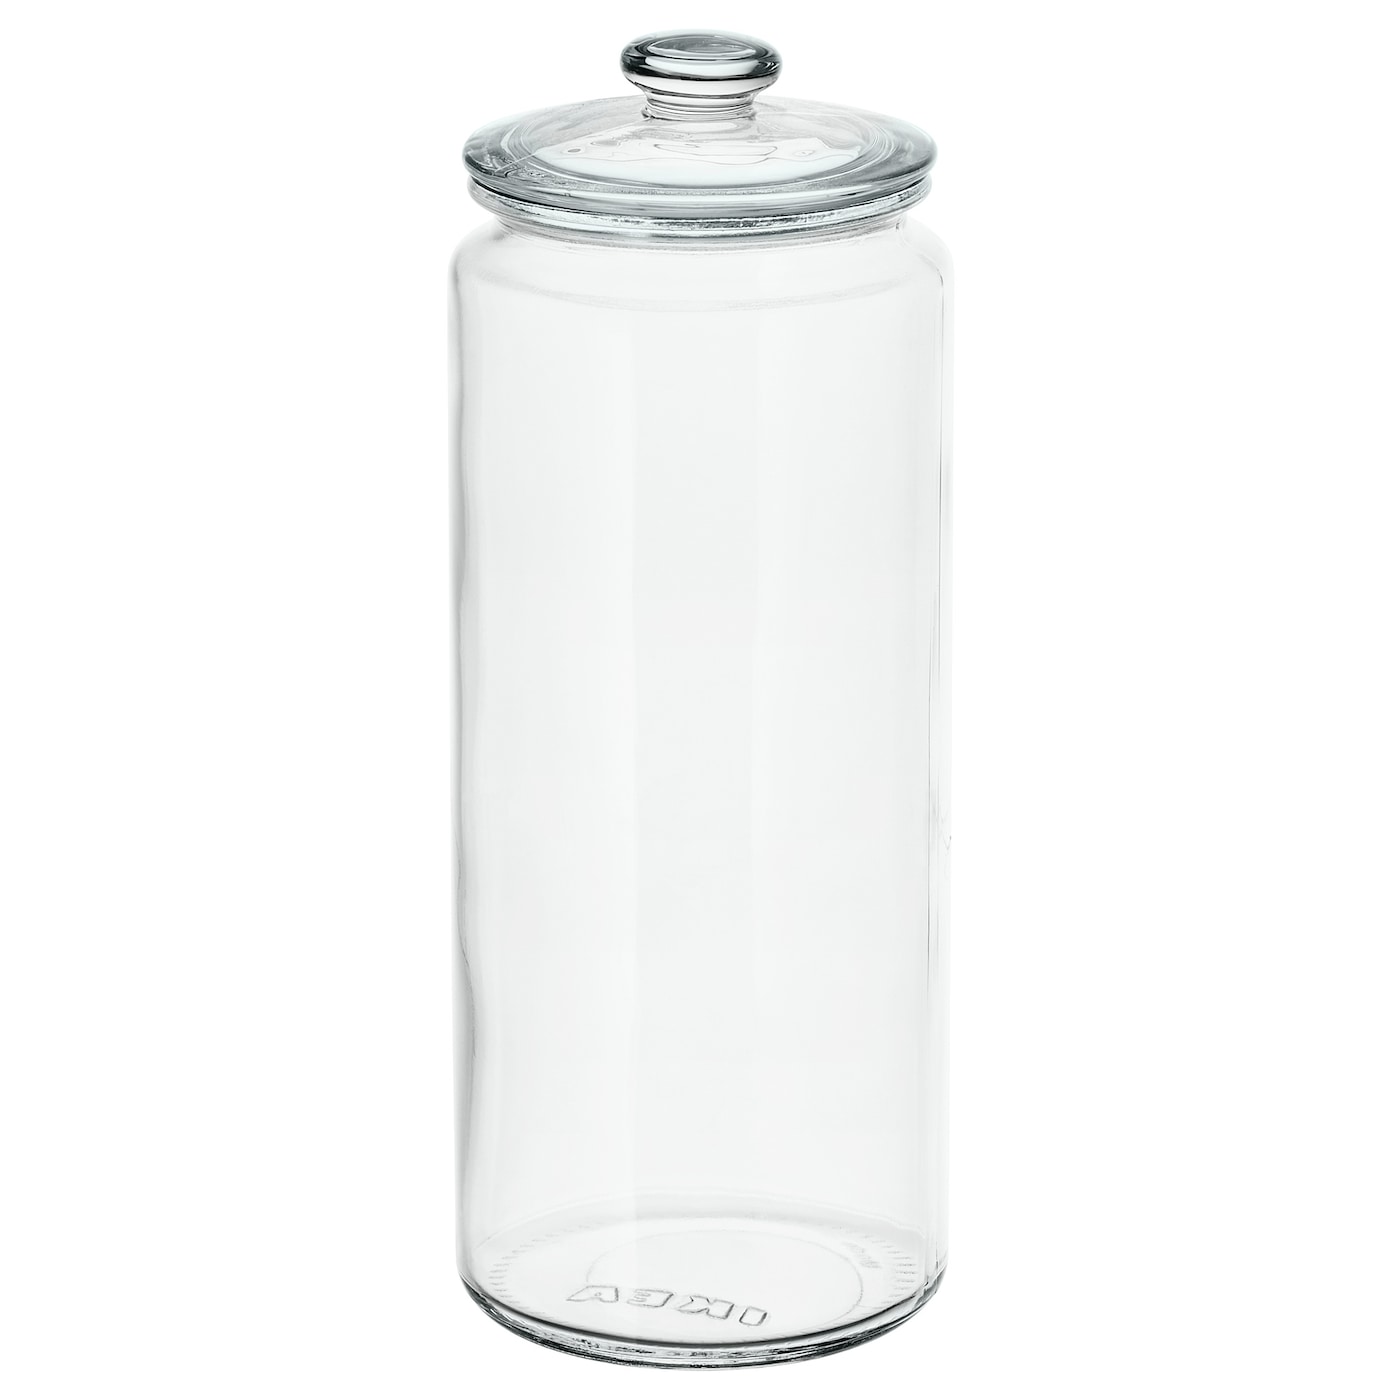 SPINNARHAJ Jar with lid, off-white, 5 - IKEA